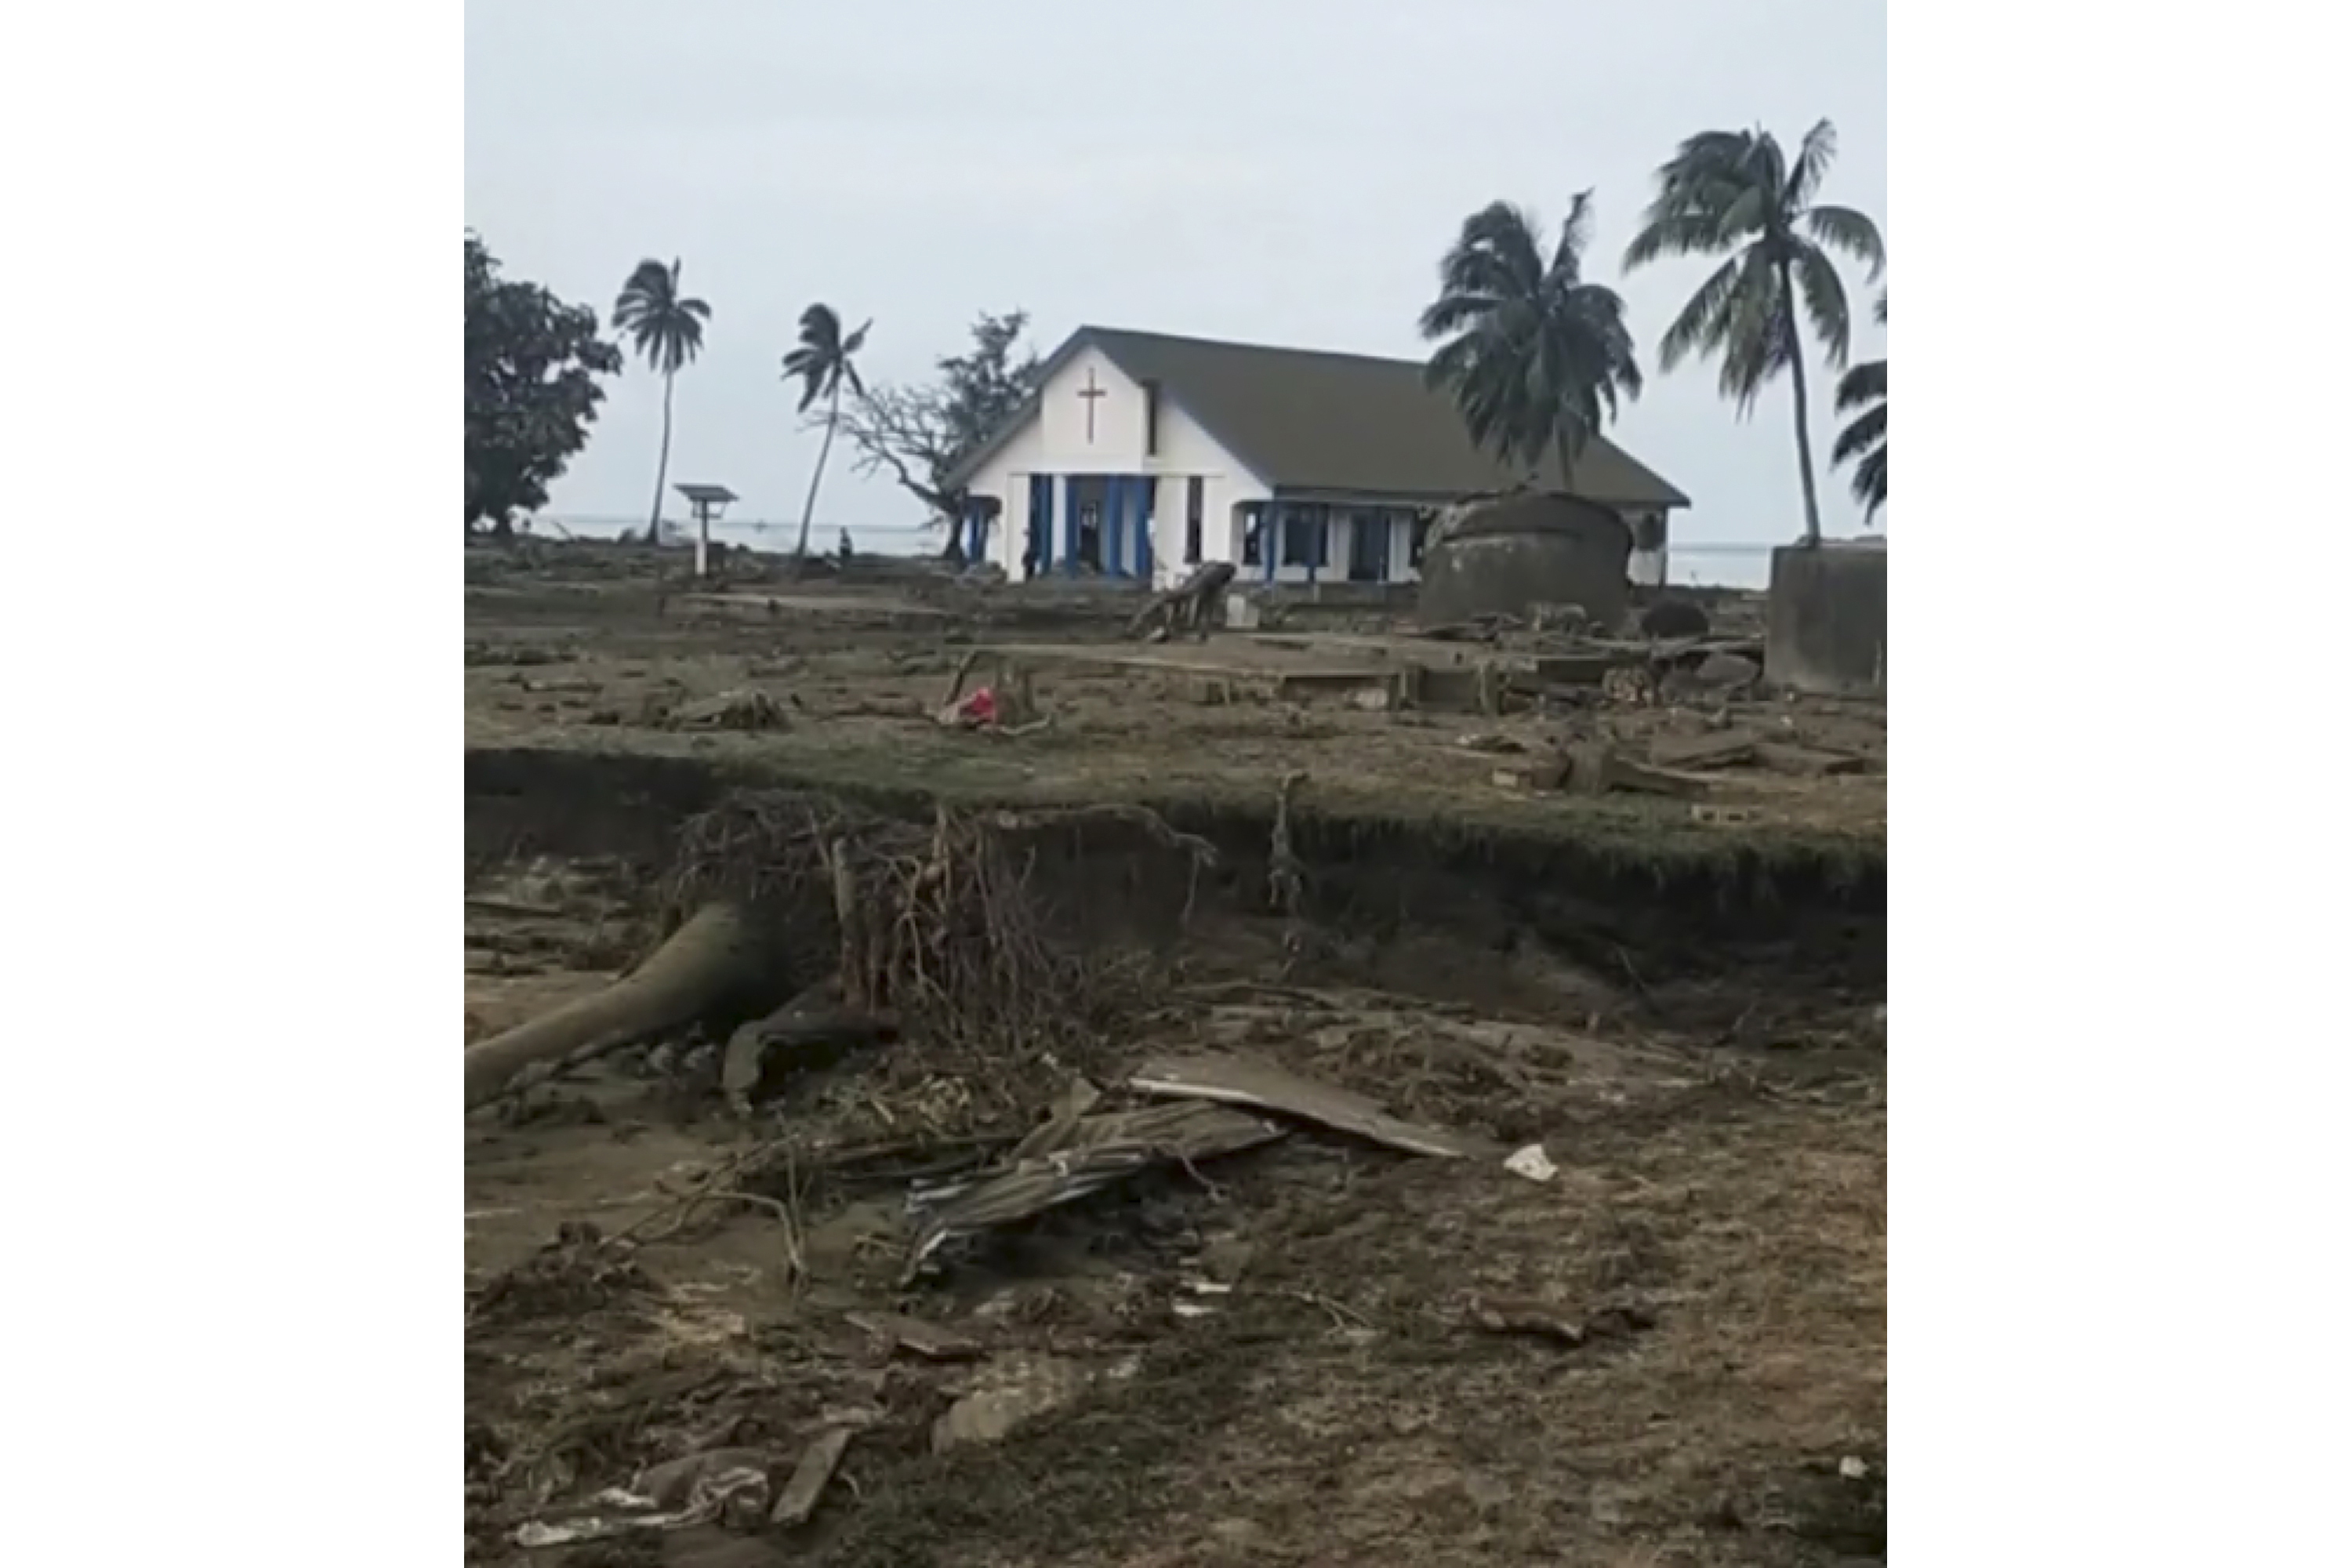 A damaged church on the Tongan island of Atata